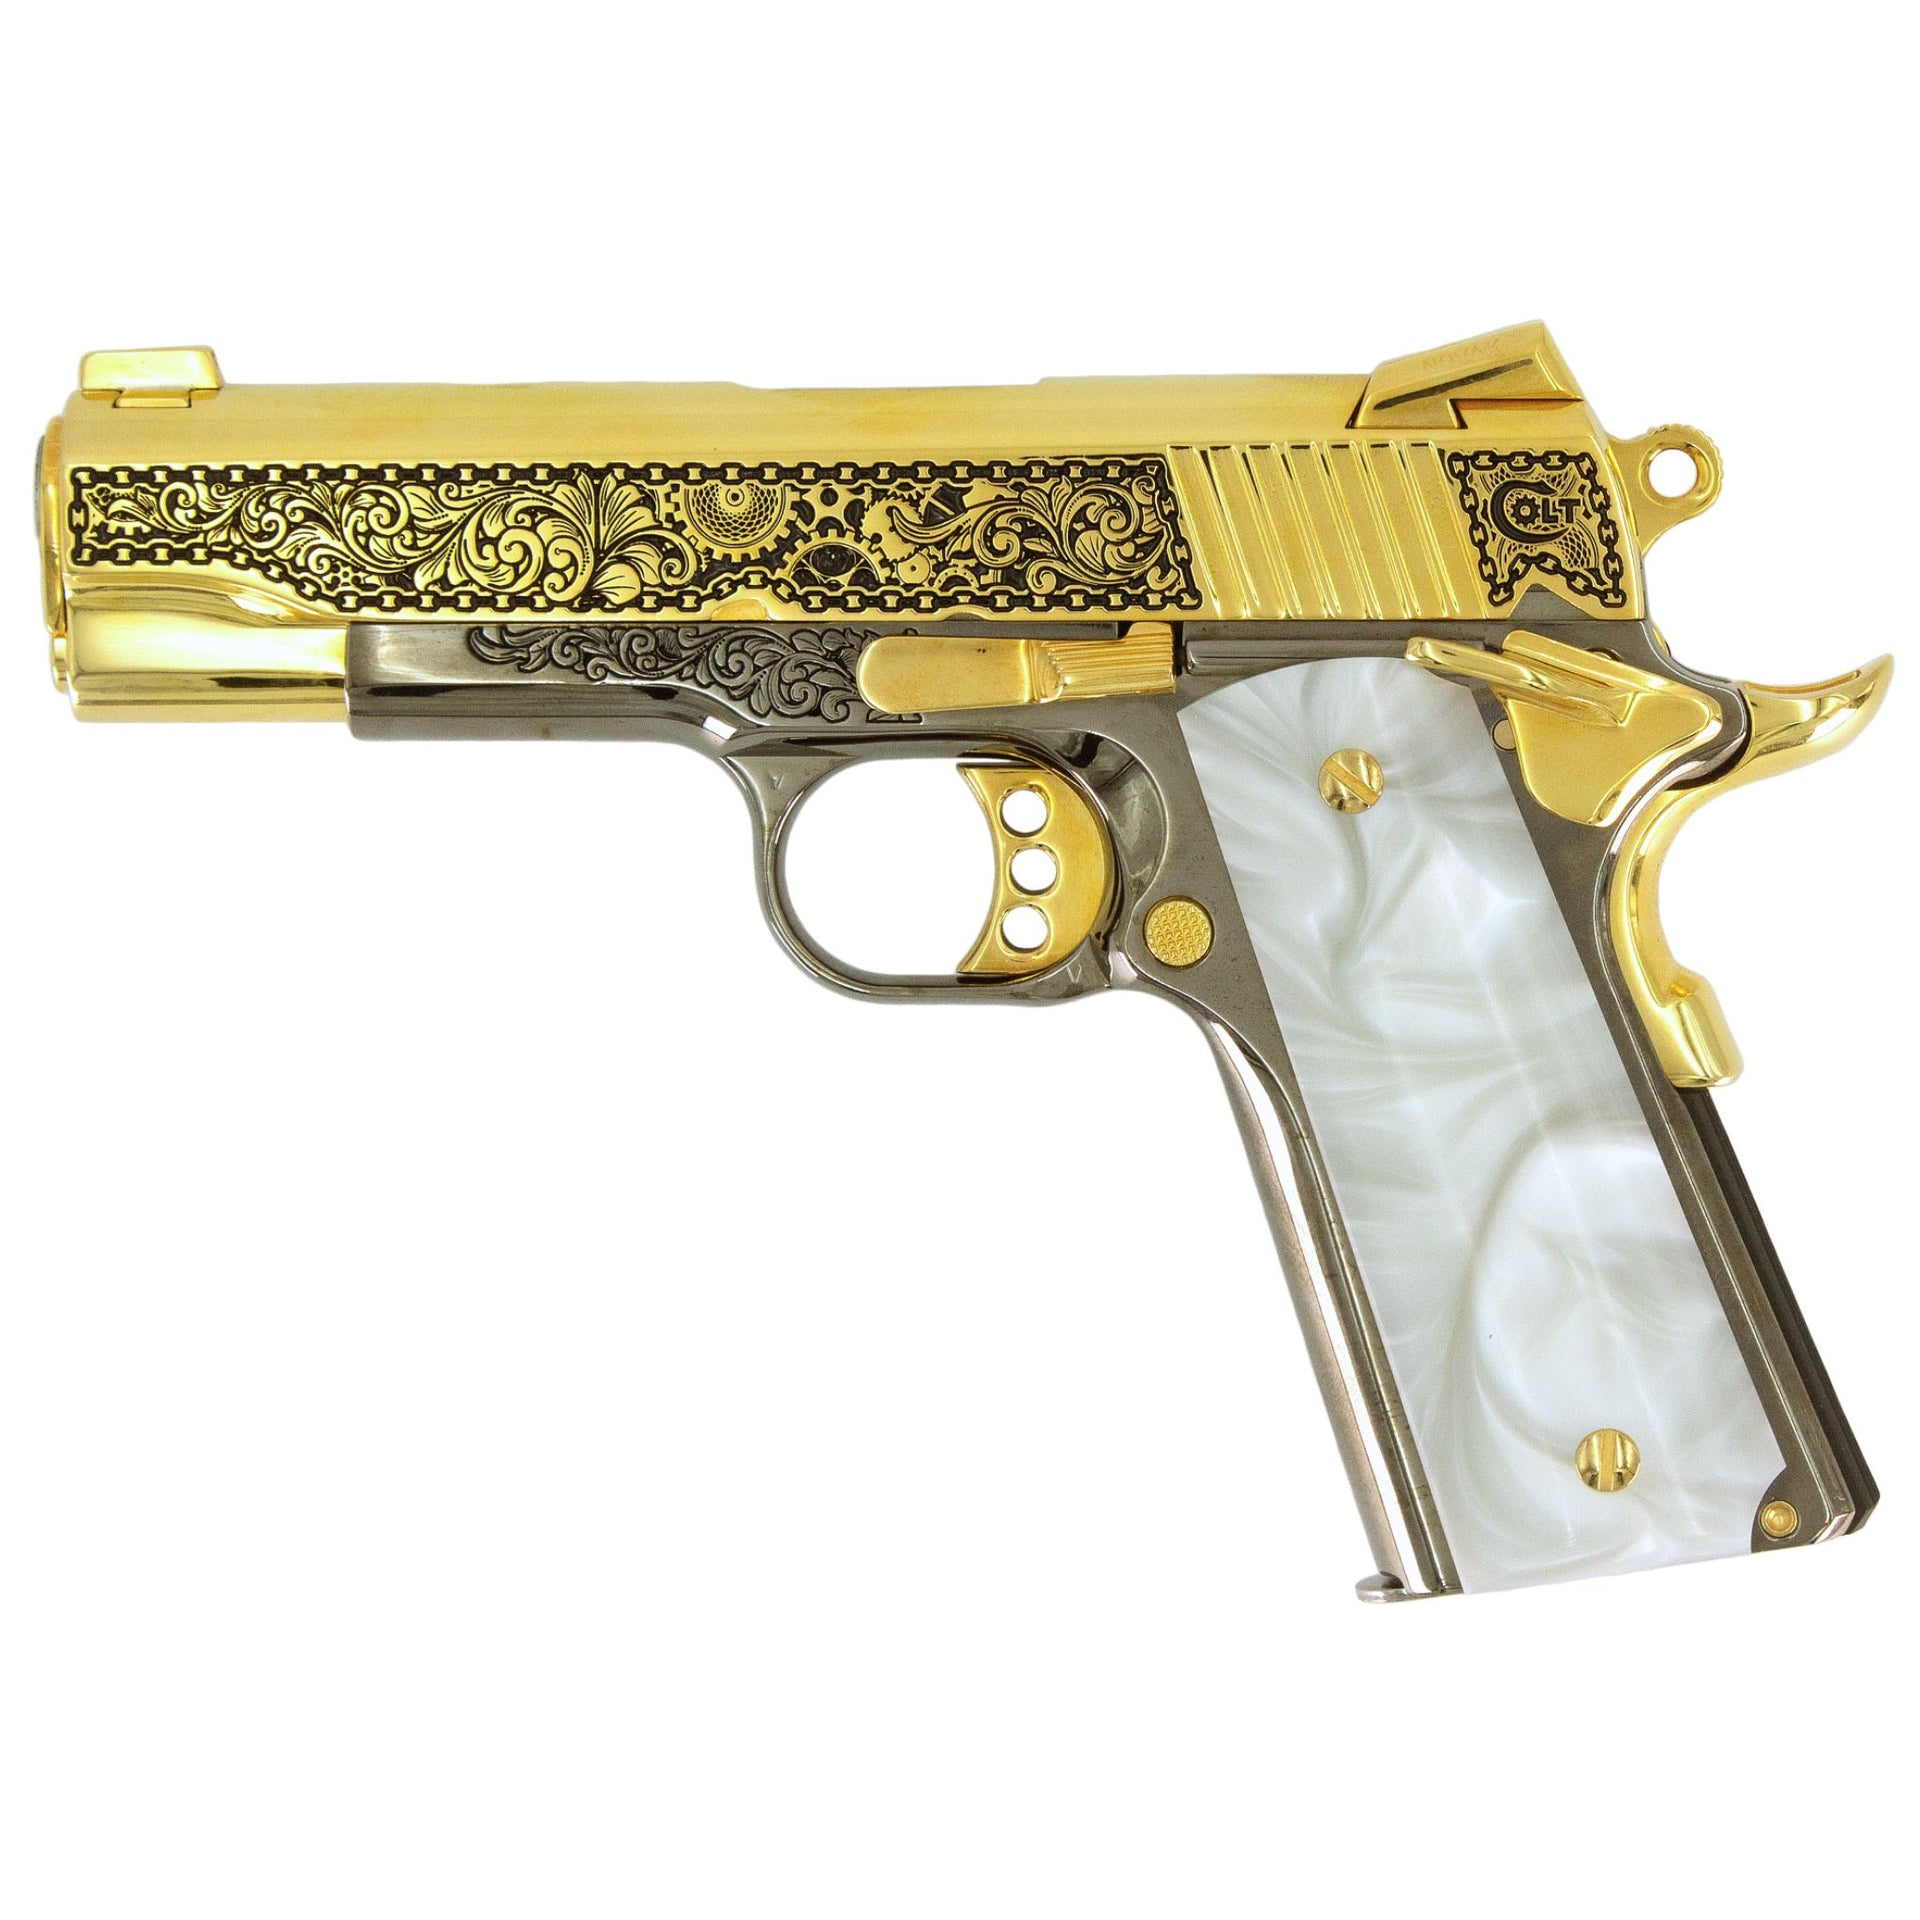 Colt 1911 Combat Commander, 45 ACP,  Engraved In High Polish 24 karat Gold Plated and Black Chrome Clockwork Design,SKU: 7010463121510, Gold Gun, Gold Firearm, Engraved Firearm 